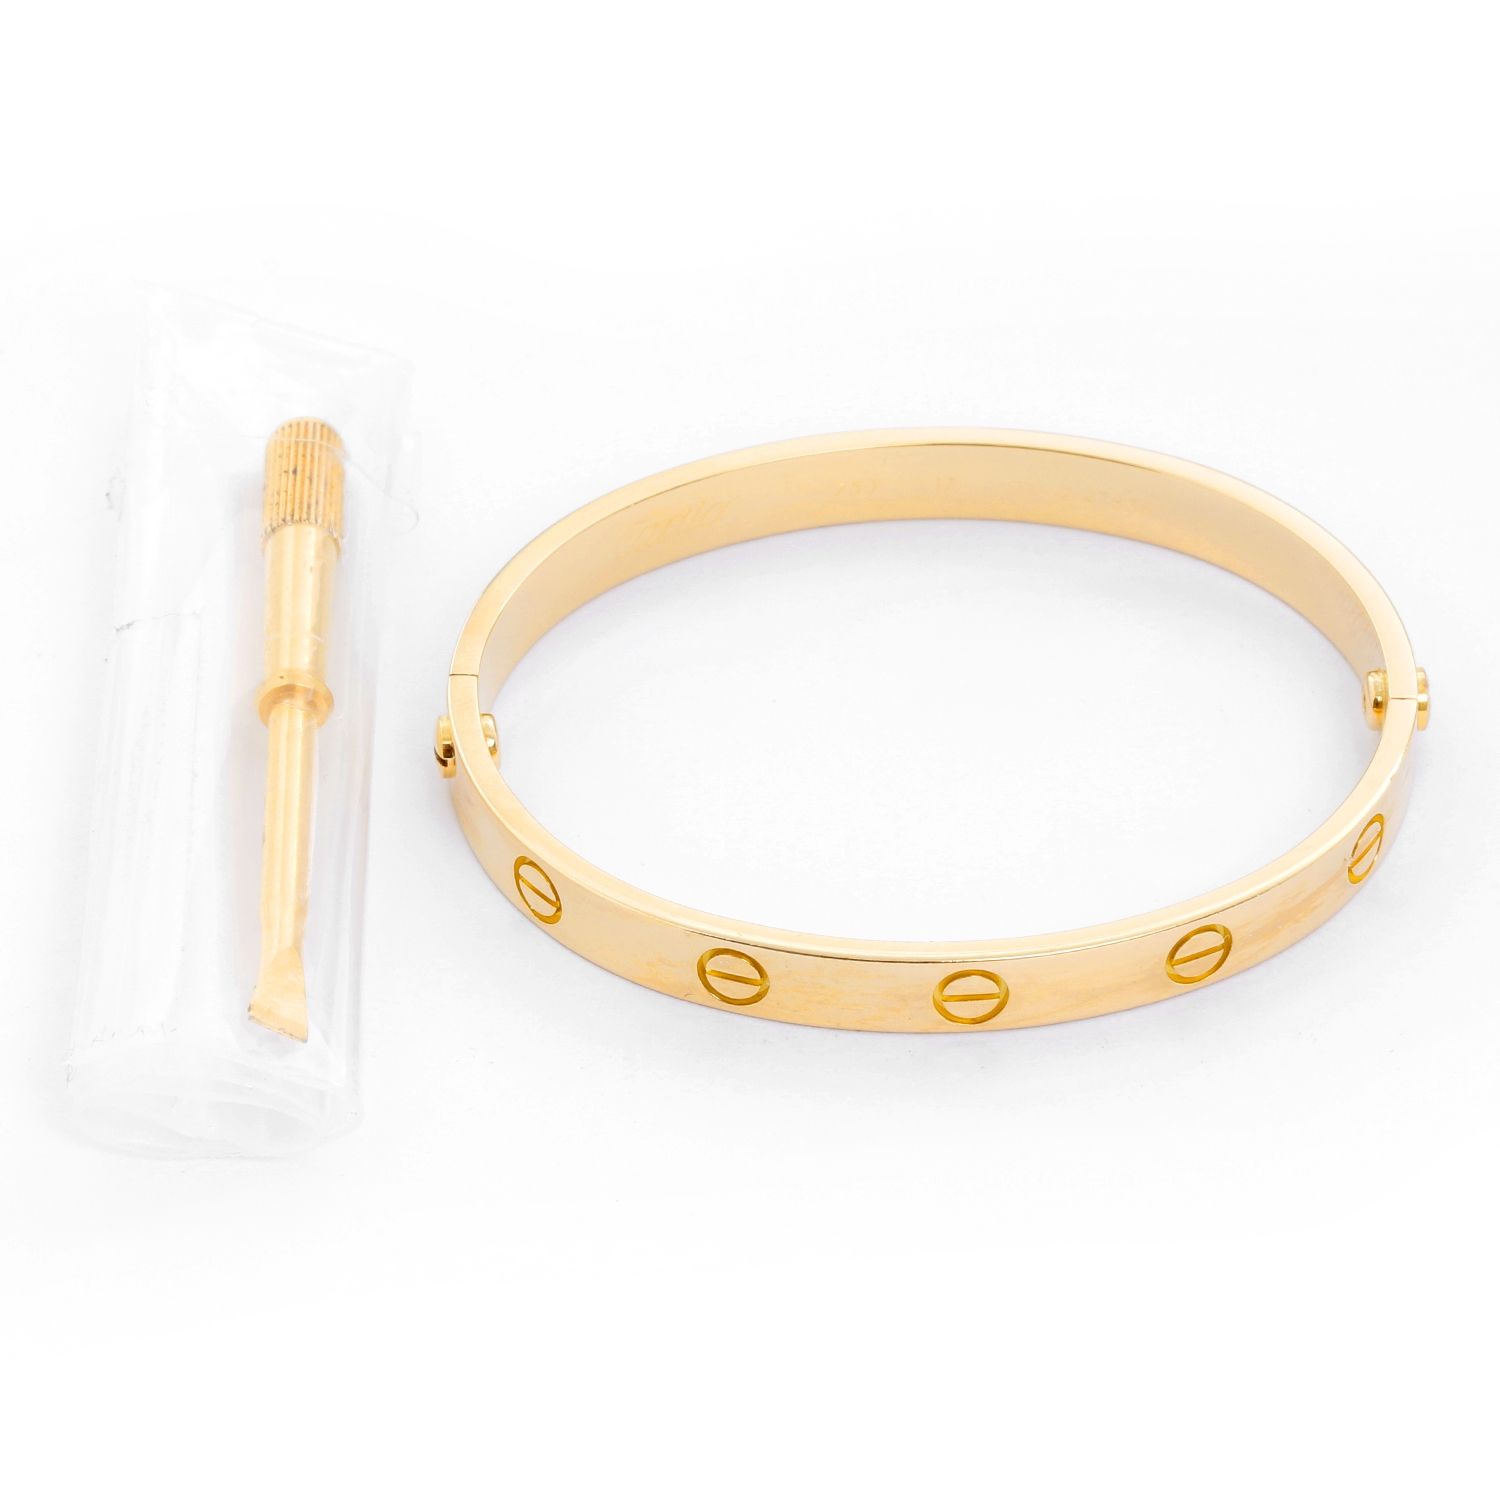 cartier love bracelet yellow gold size 17